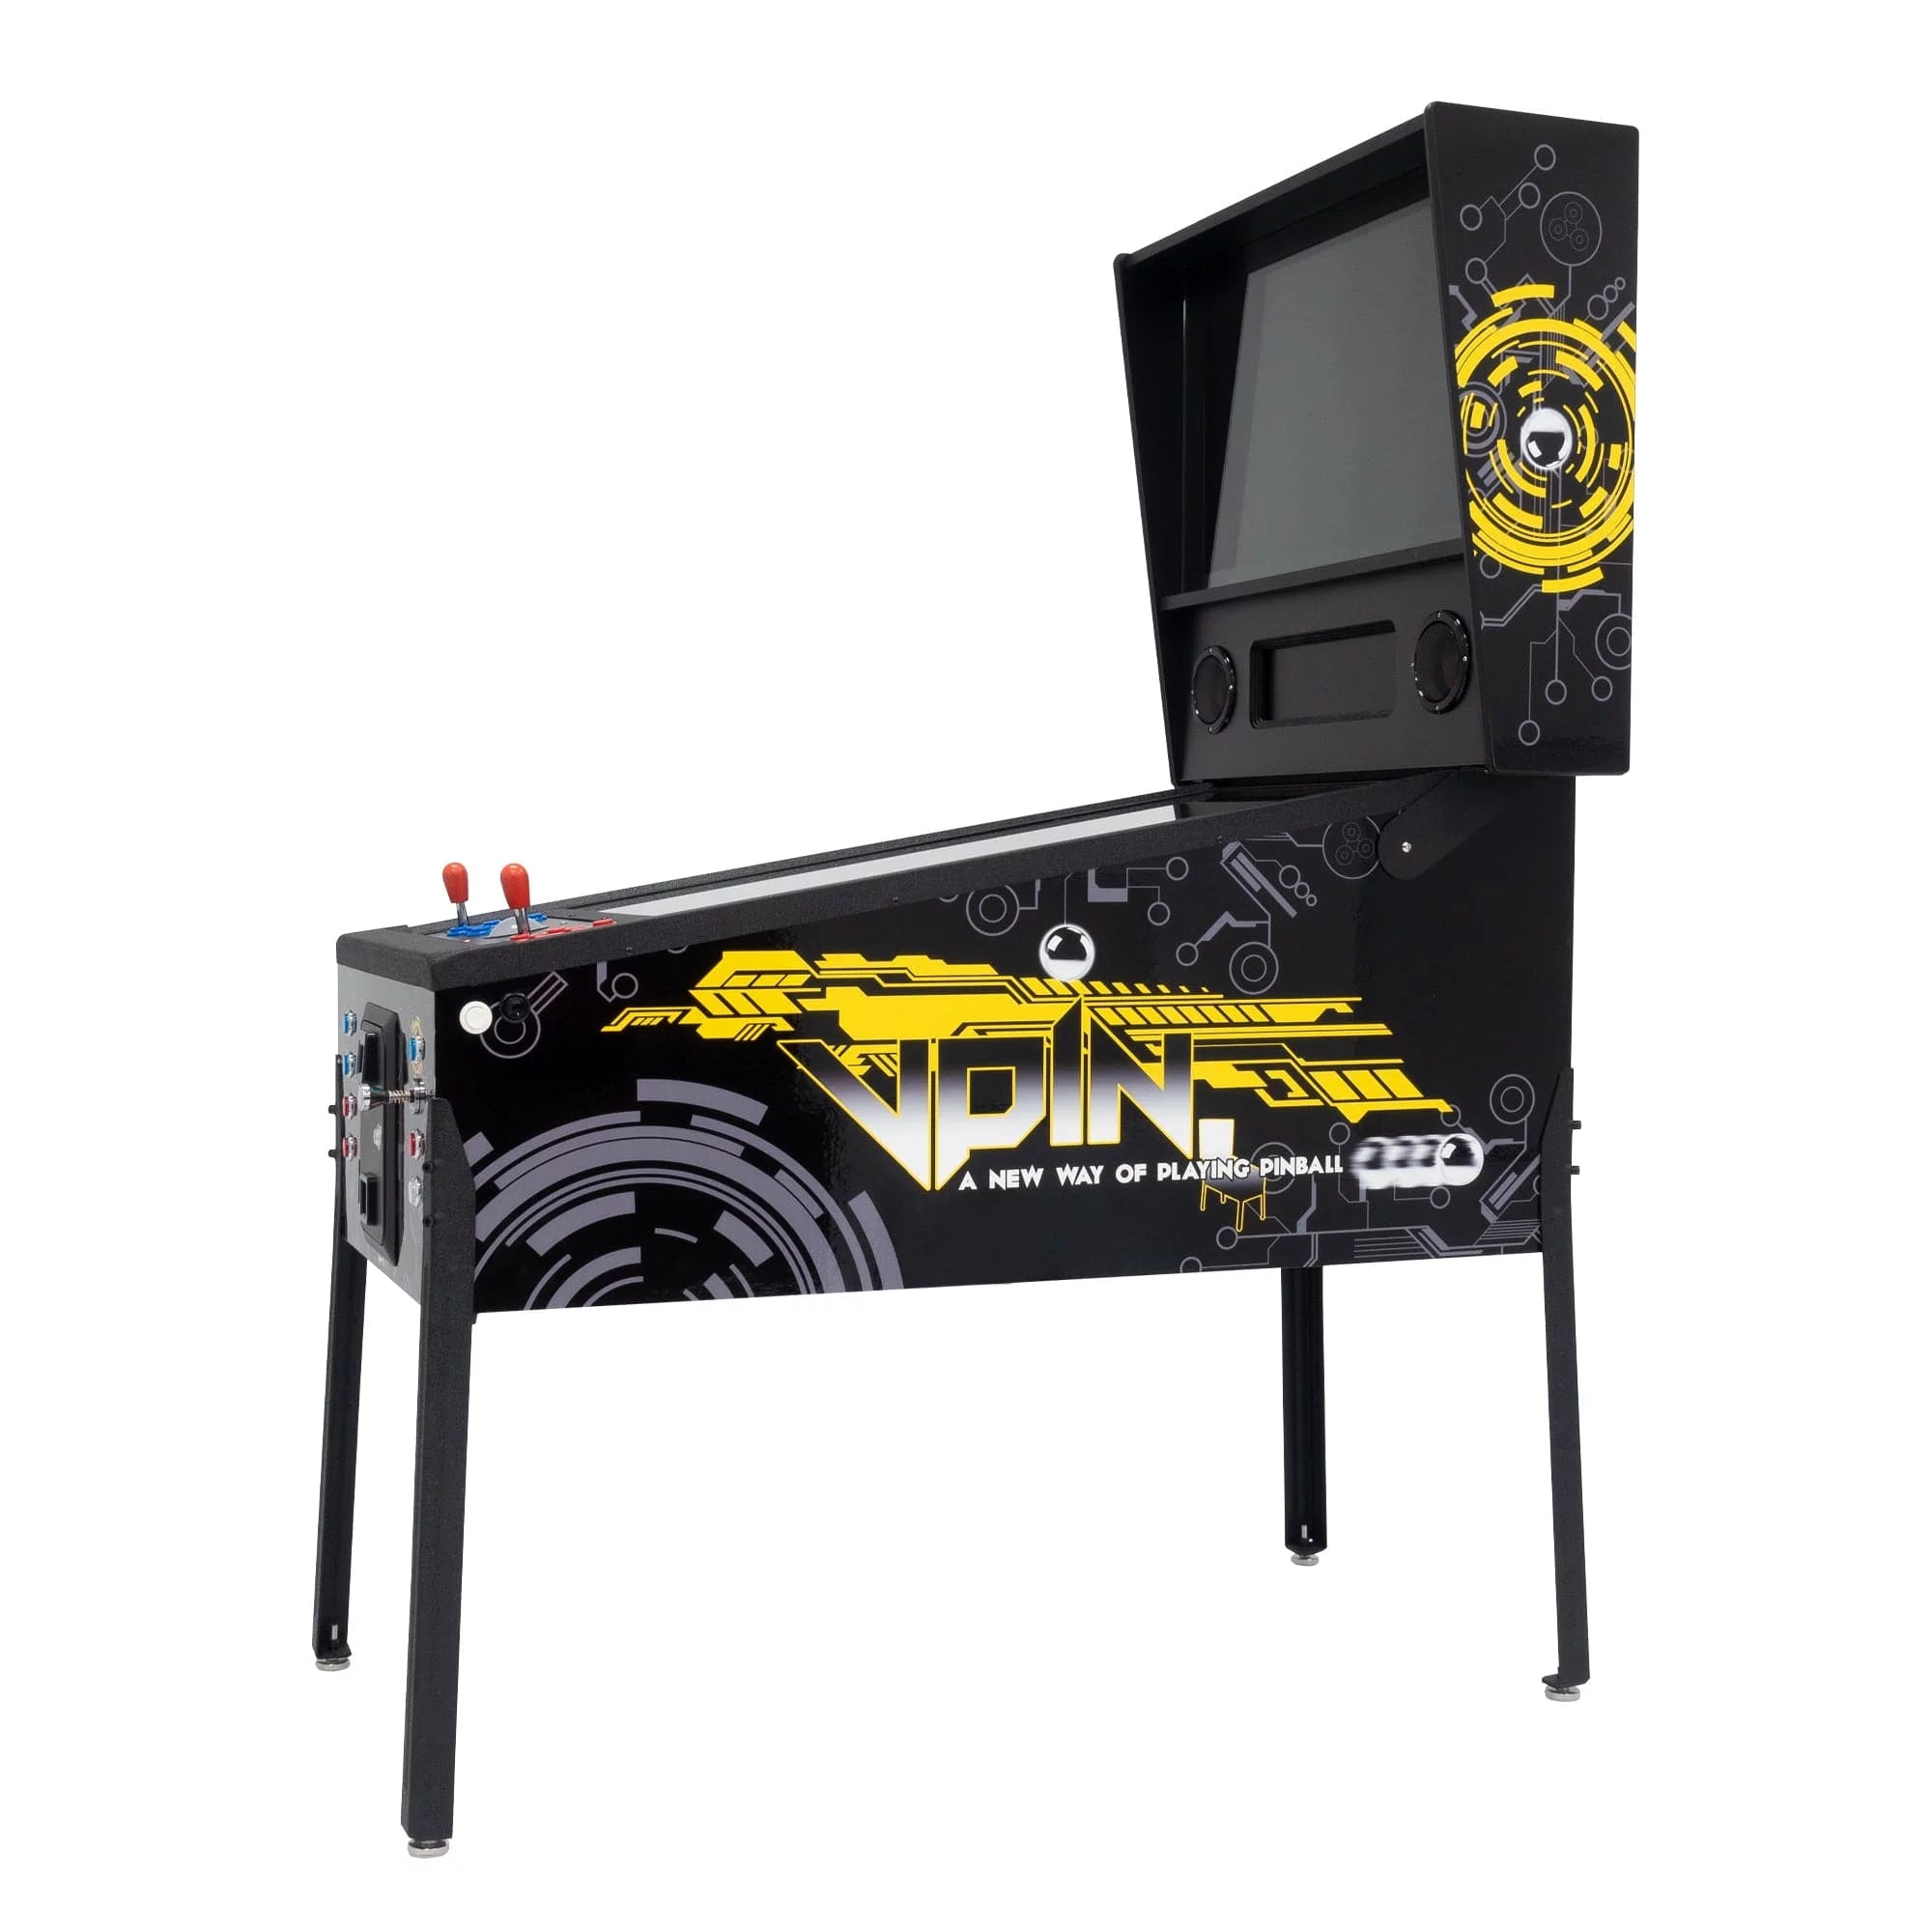 The Pincade Combo Pinball | Arcade All-In-One Machine